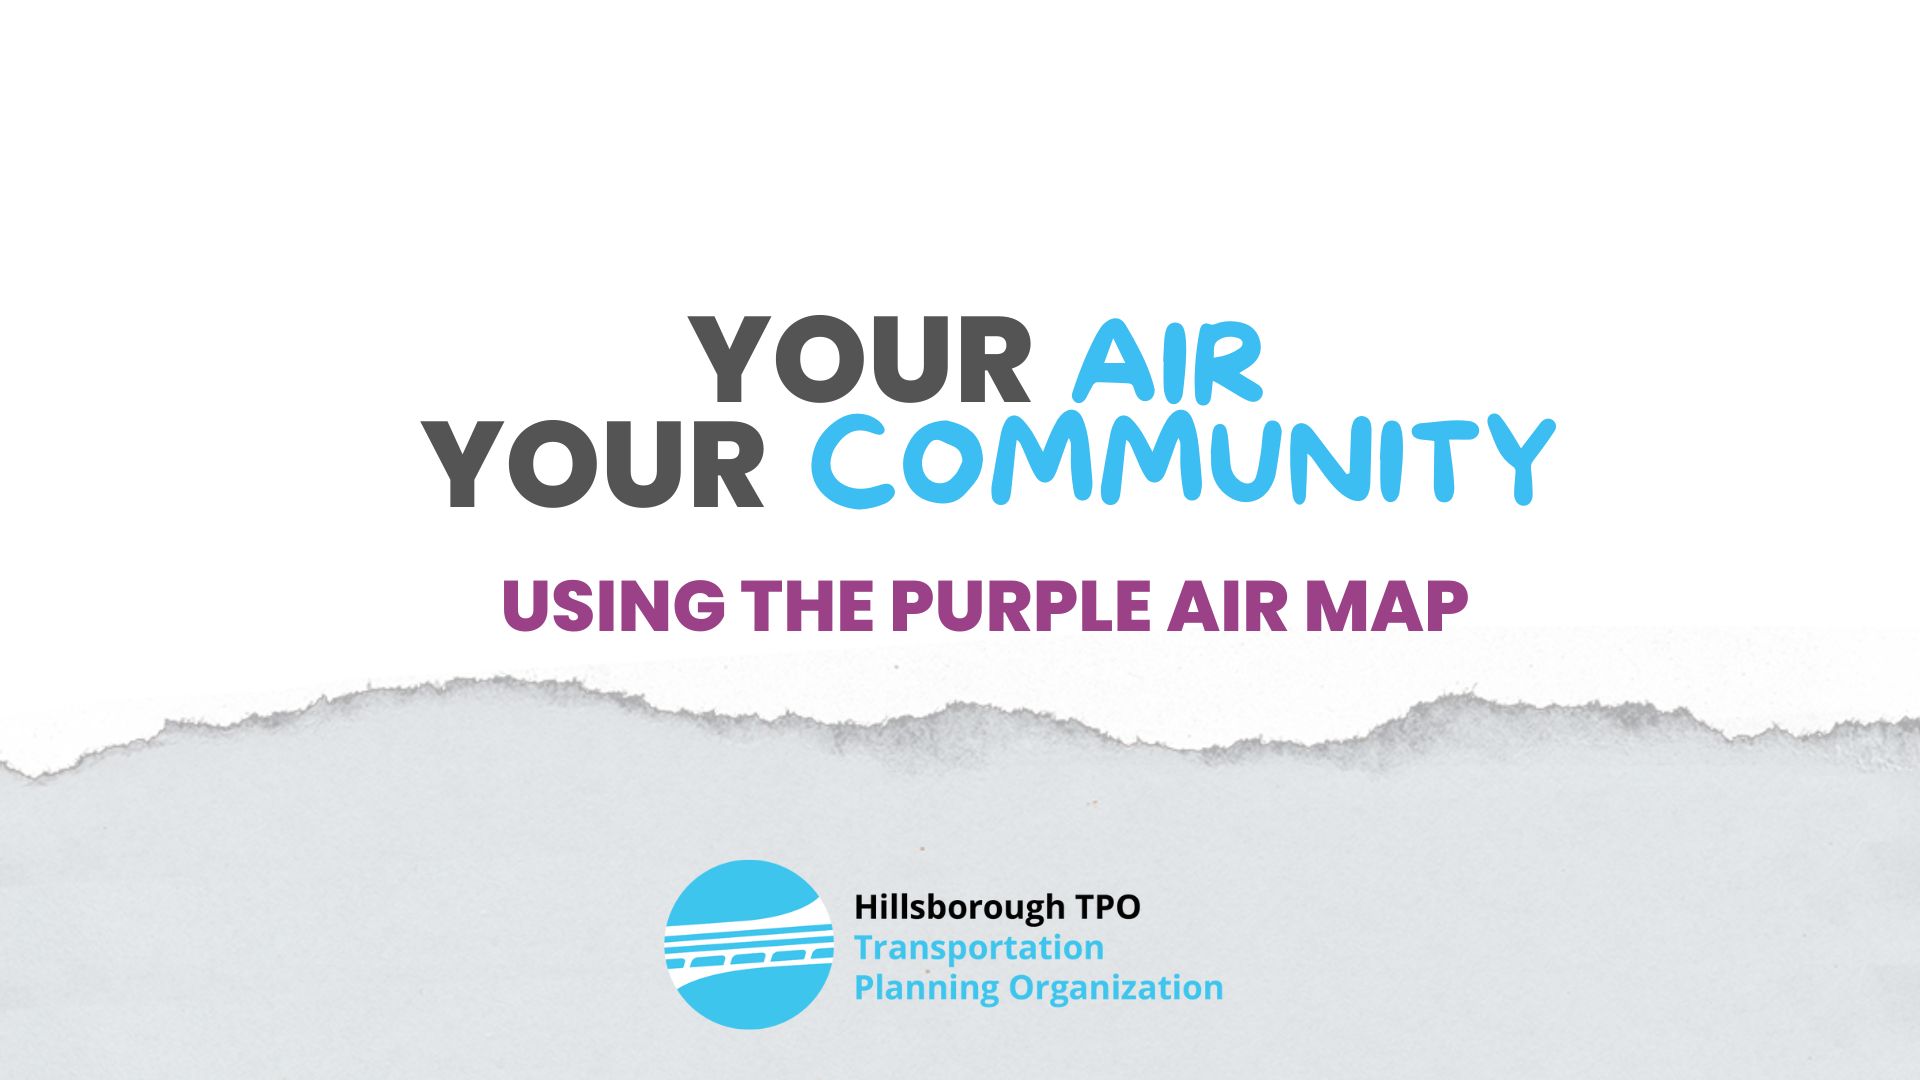 PurpleAir Map Training Video title screen